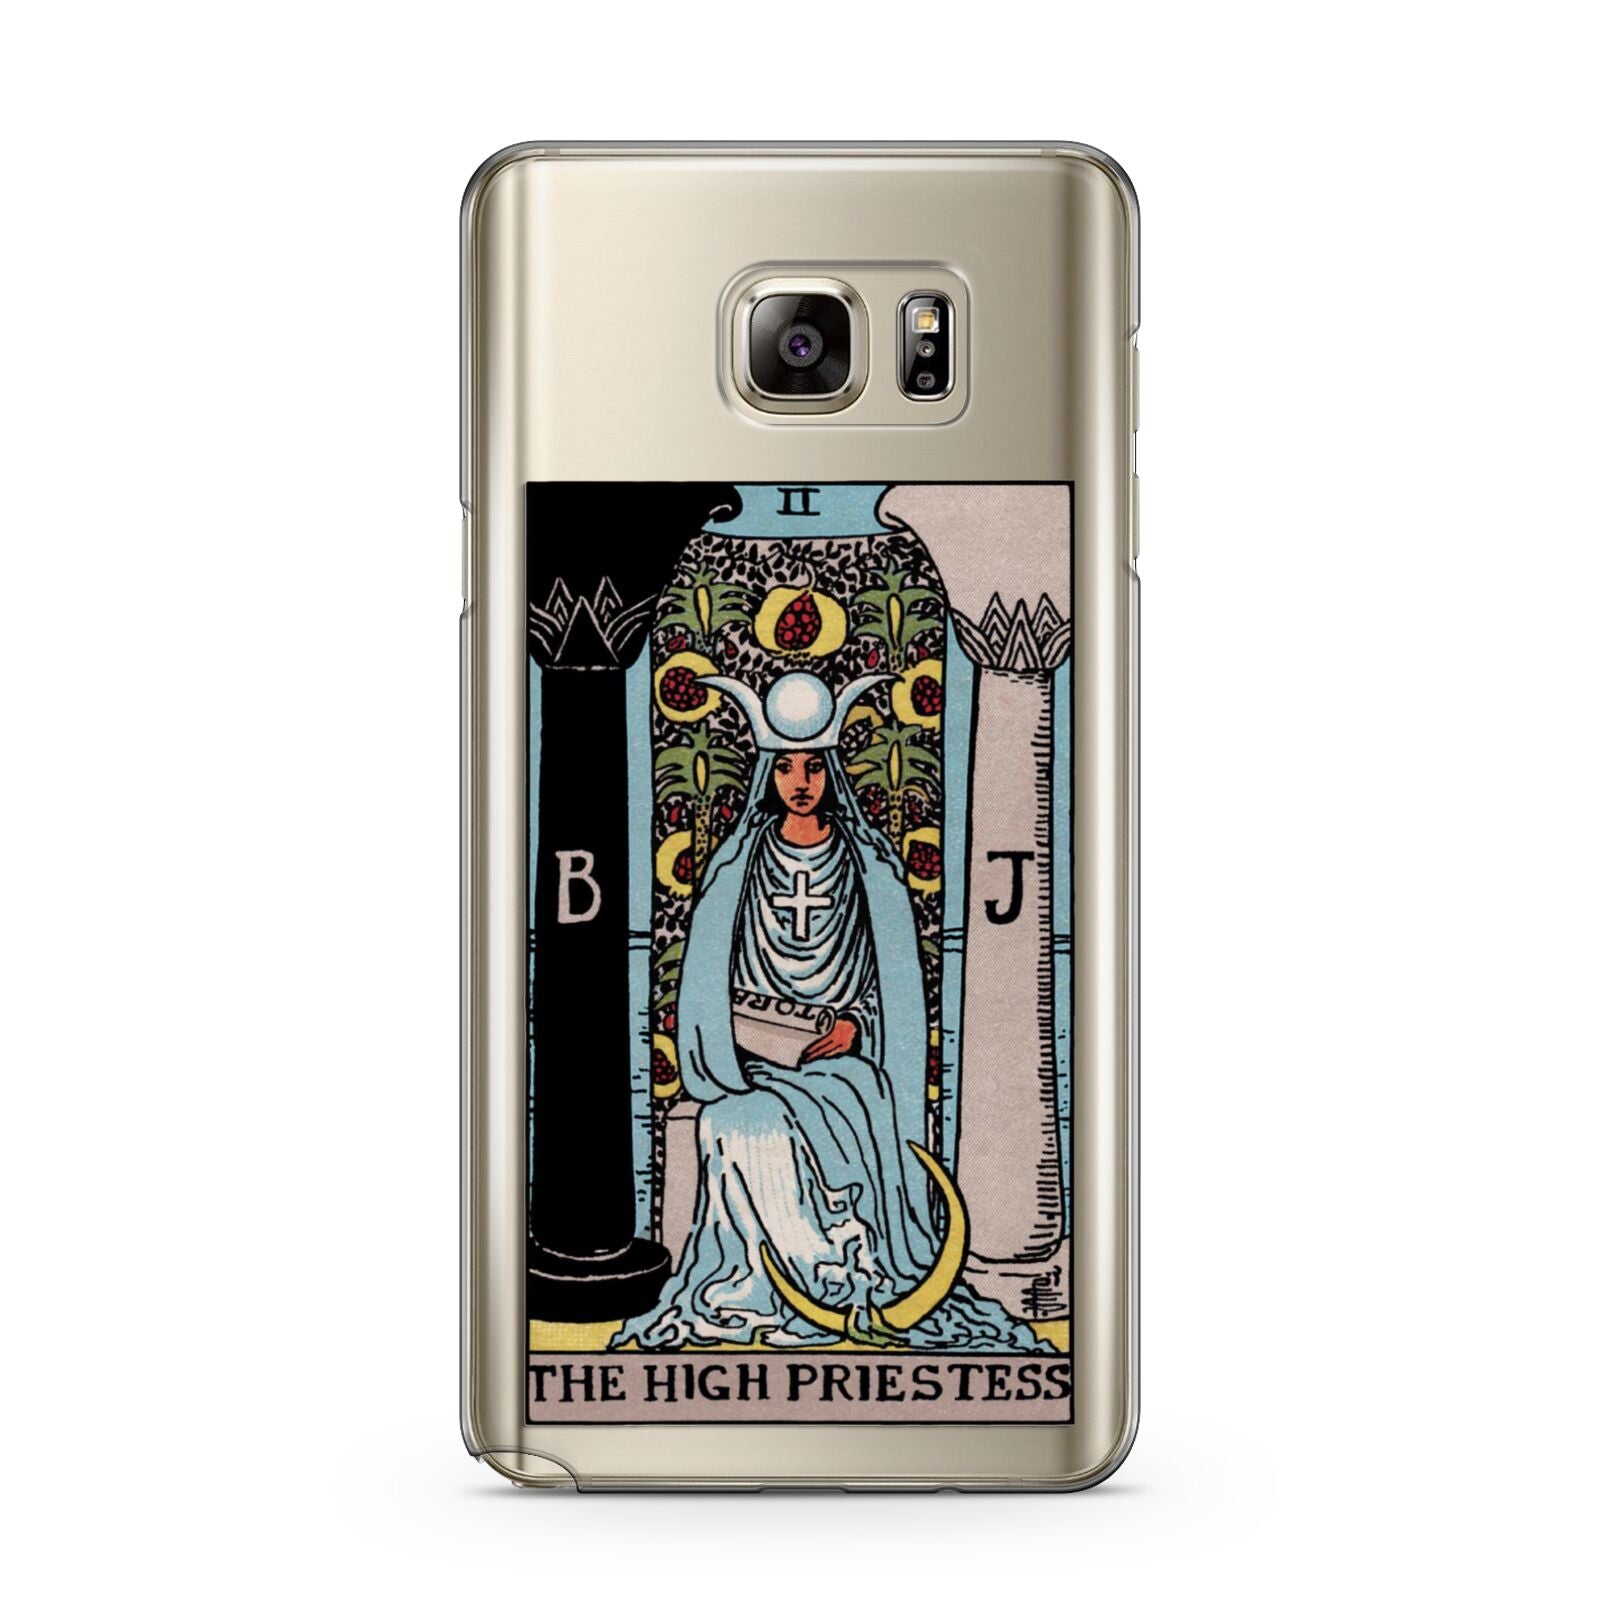 The High Priestess Tarot Card Samsung Galaxy Note 5 Case